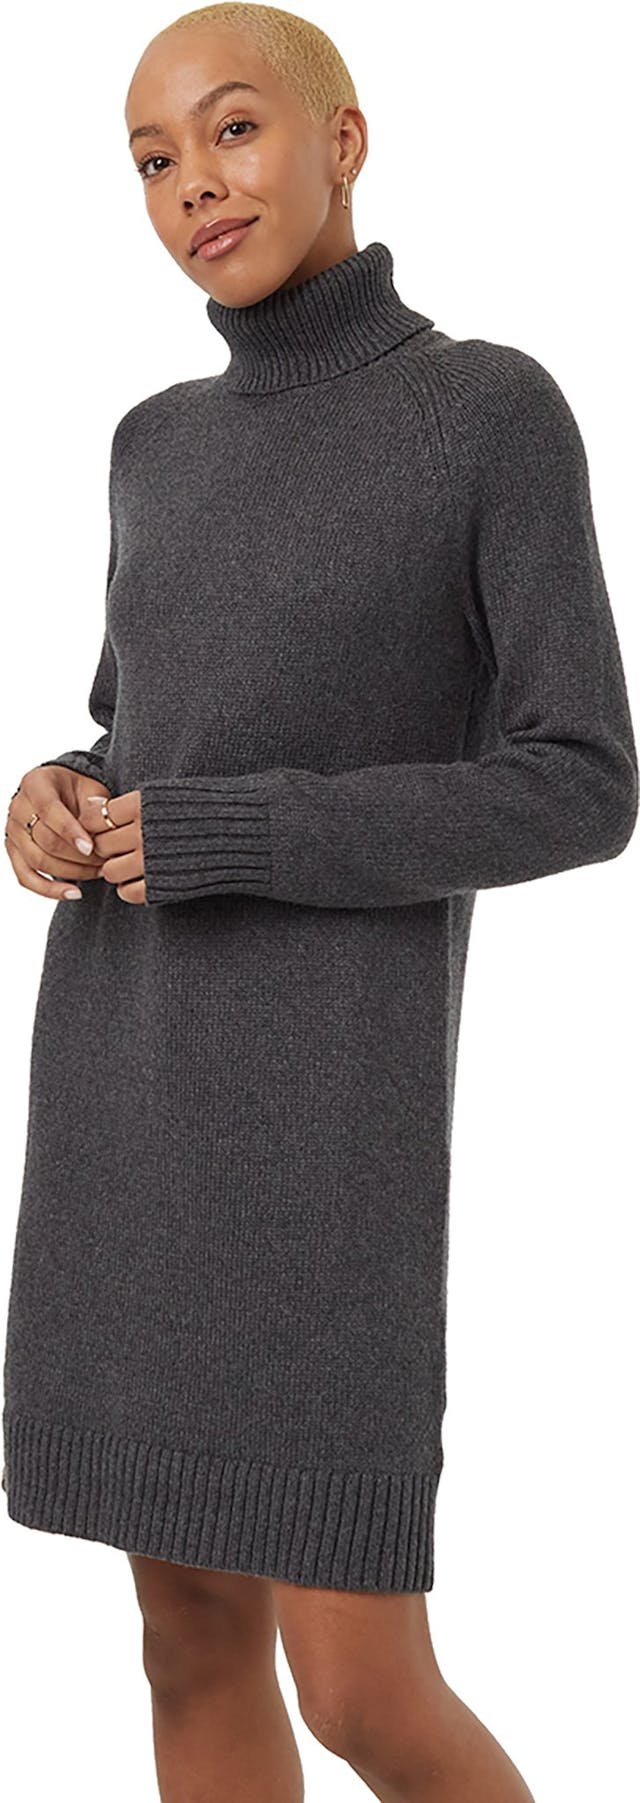 Product image for Highline Turtleneck Dress - Women's